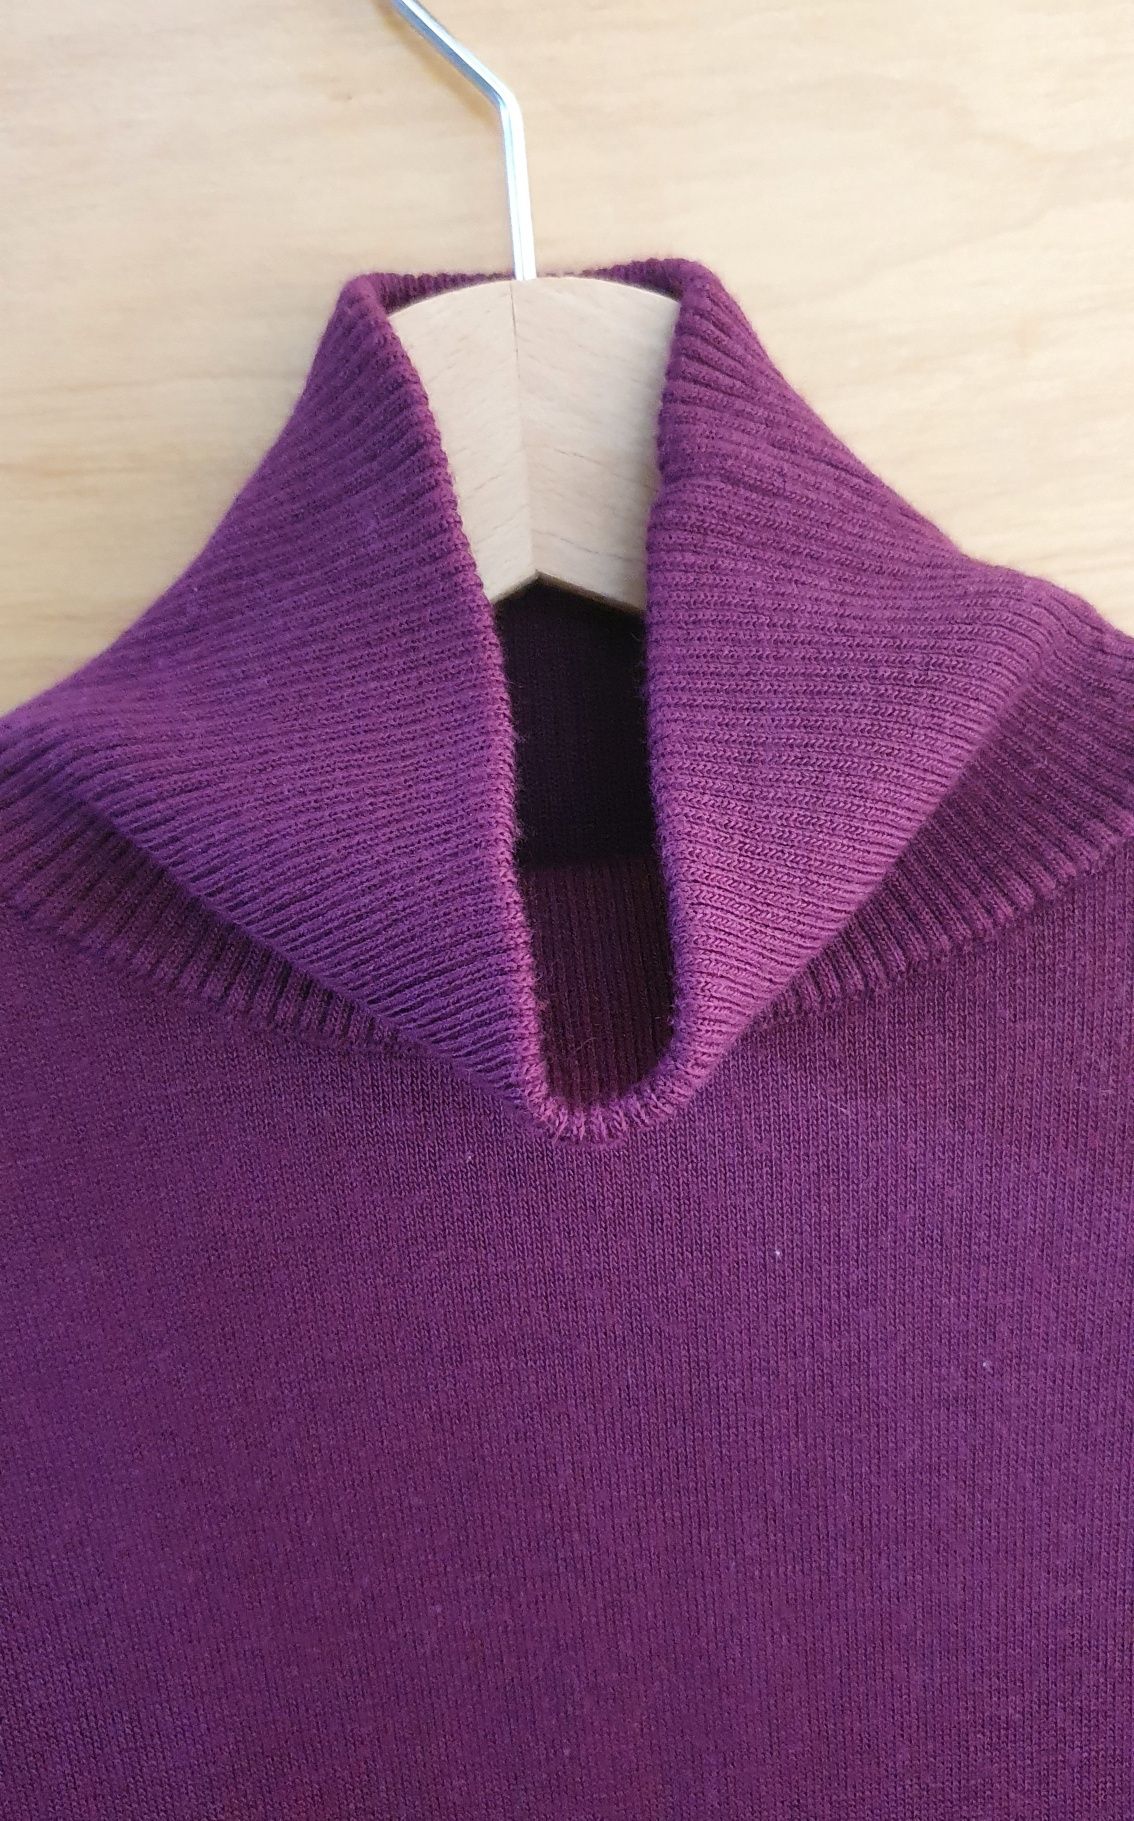 Rochie Benetton, tricot cu lana, S